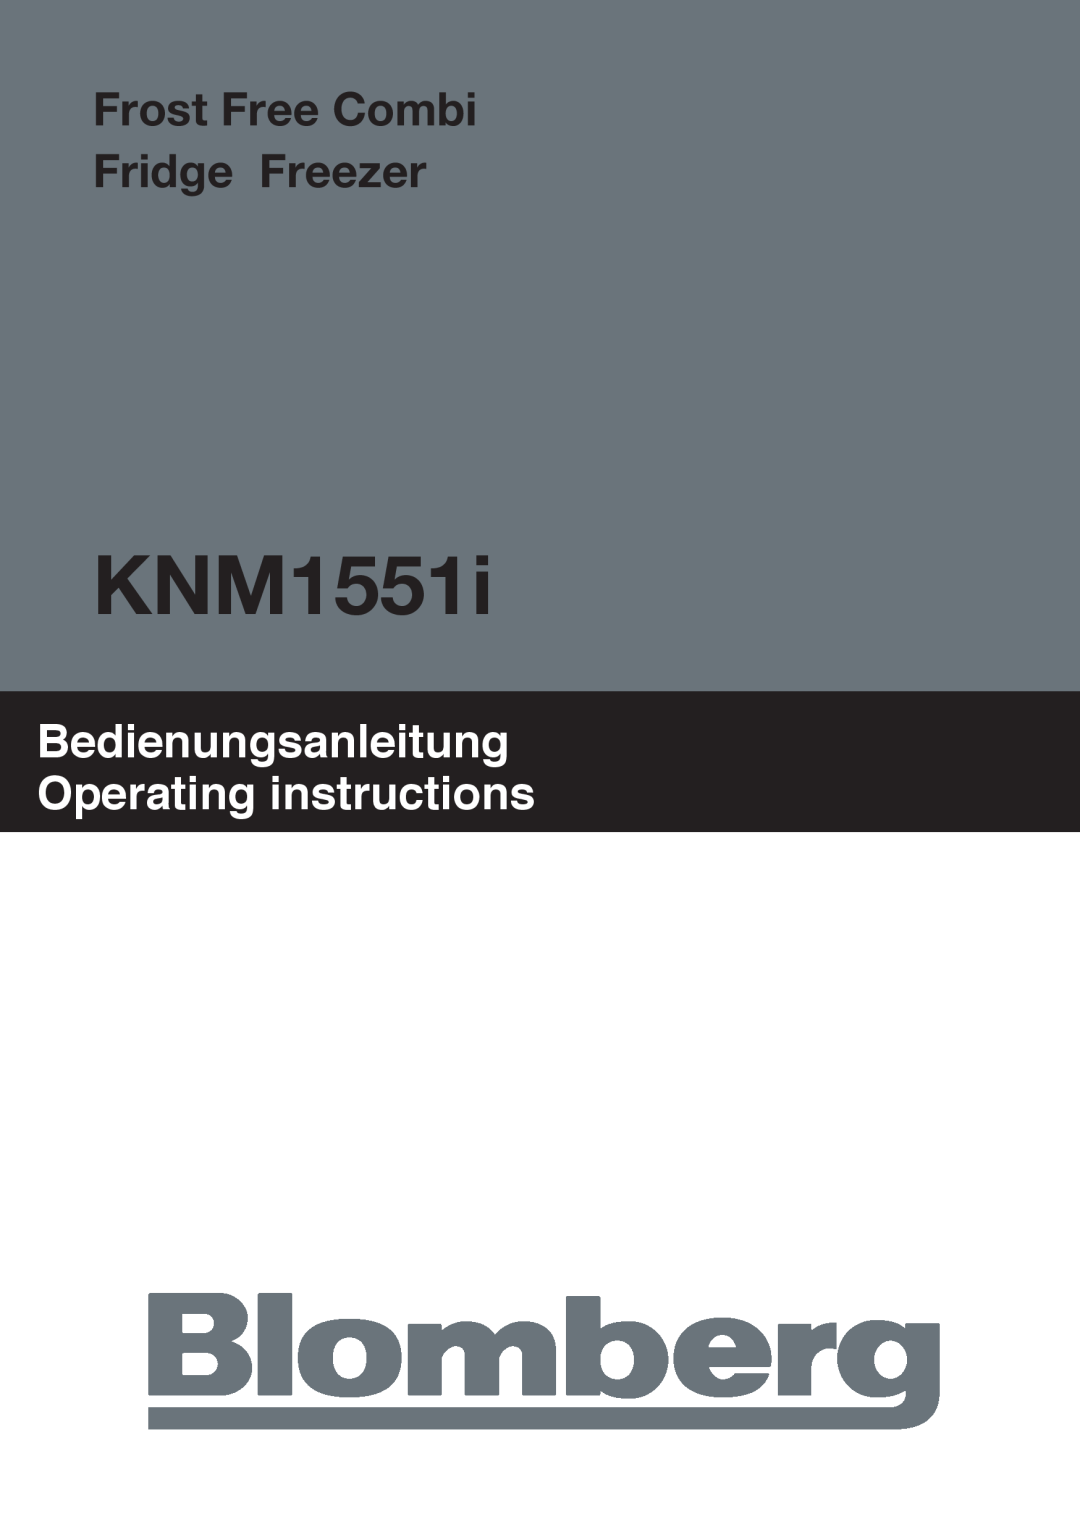 Blomberg KNM1551i manual Frost Free Combi Fridge Freezer, Bedienungsanleitung Operating instructions 